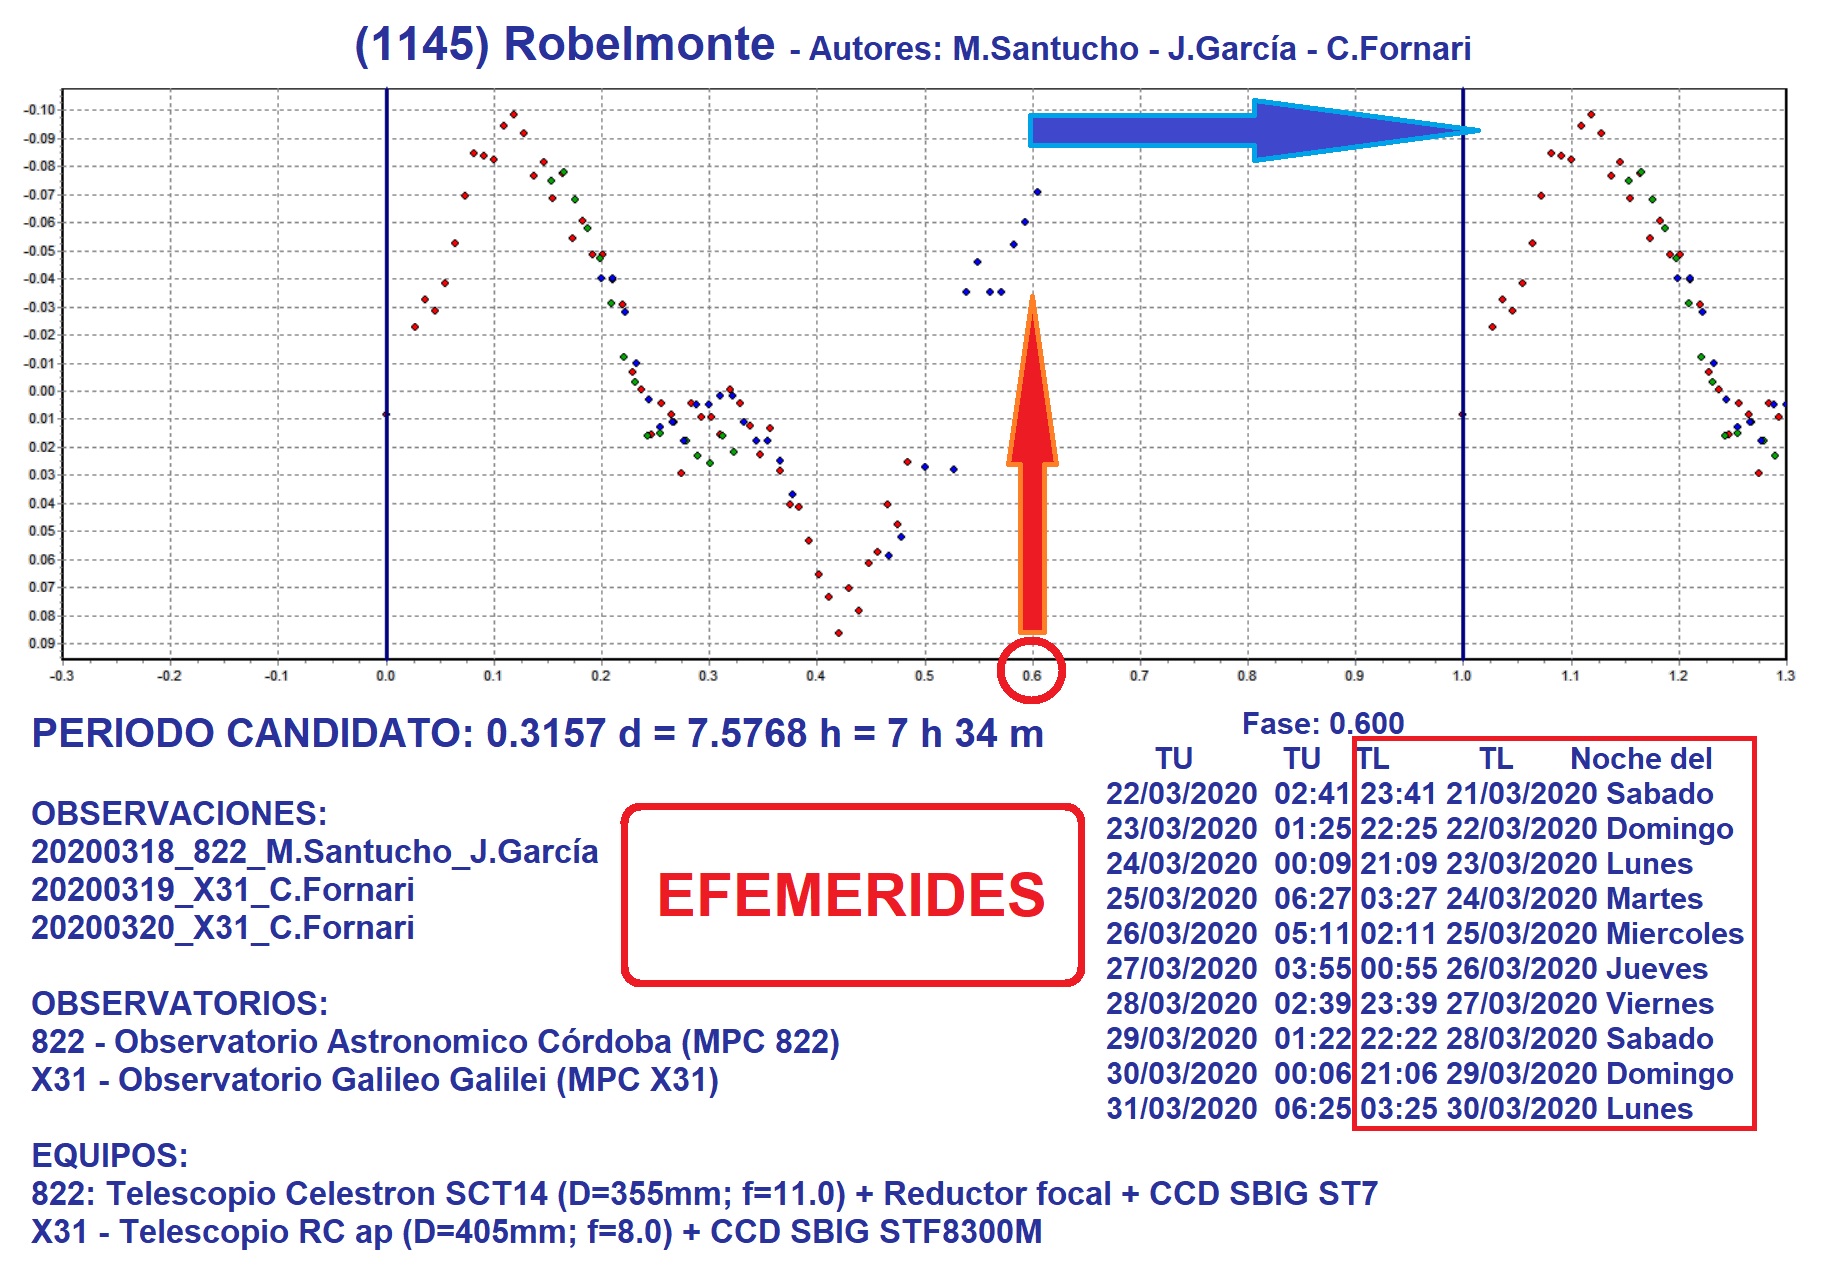 1145 Robelmonte EFEMERIDES marzo 2020.jpg